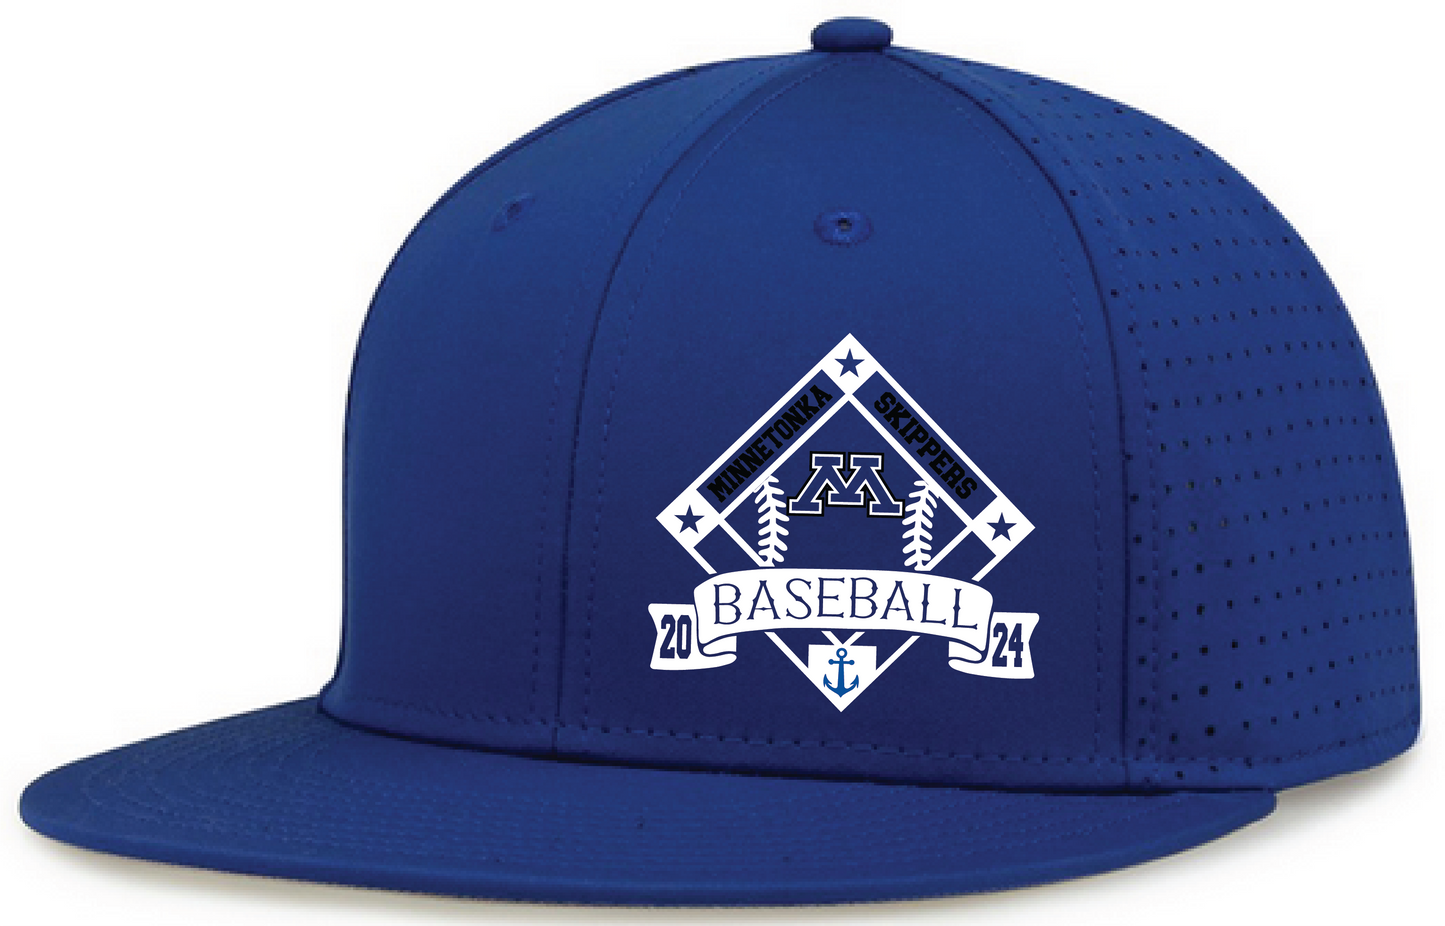 Baseball Perforated Flat Bill Snapback Hat